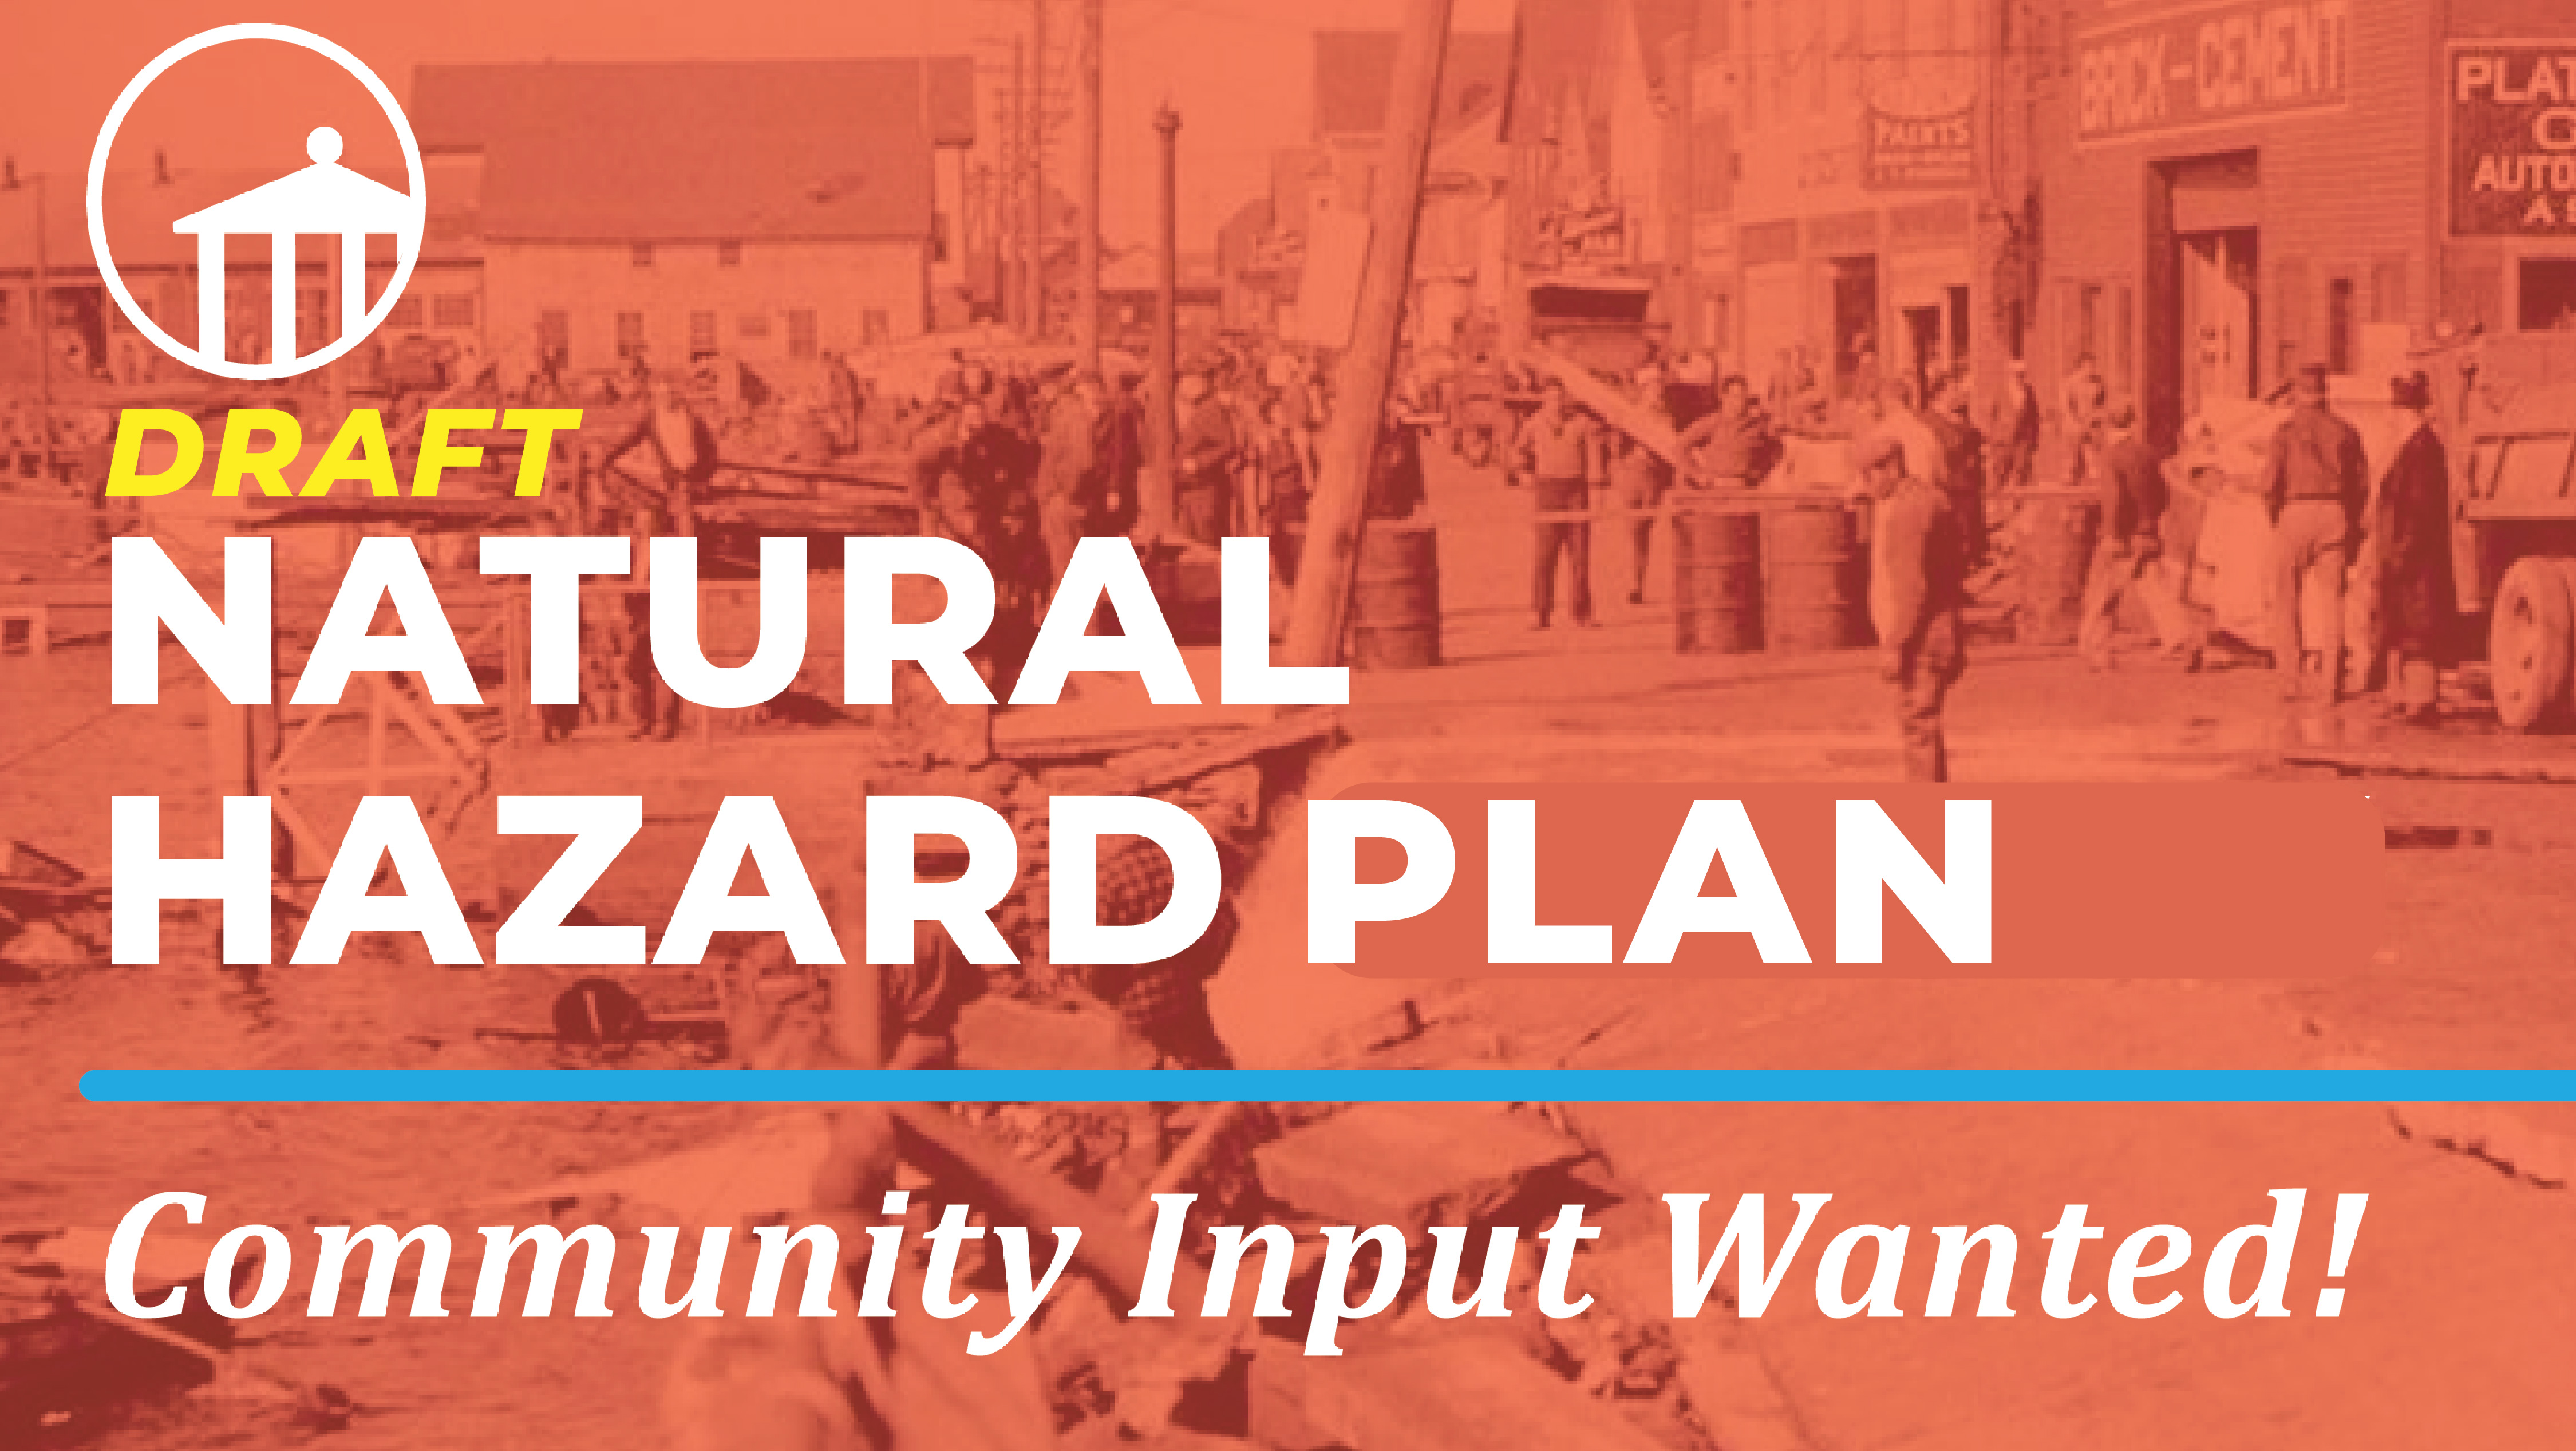 Newport's Hazard Mitigation Plan is Online